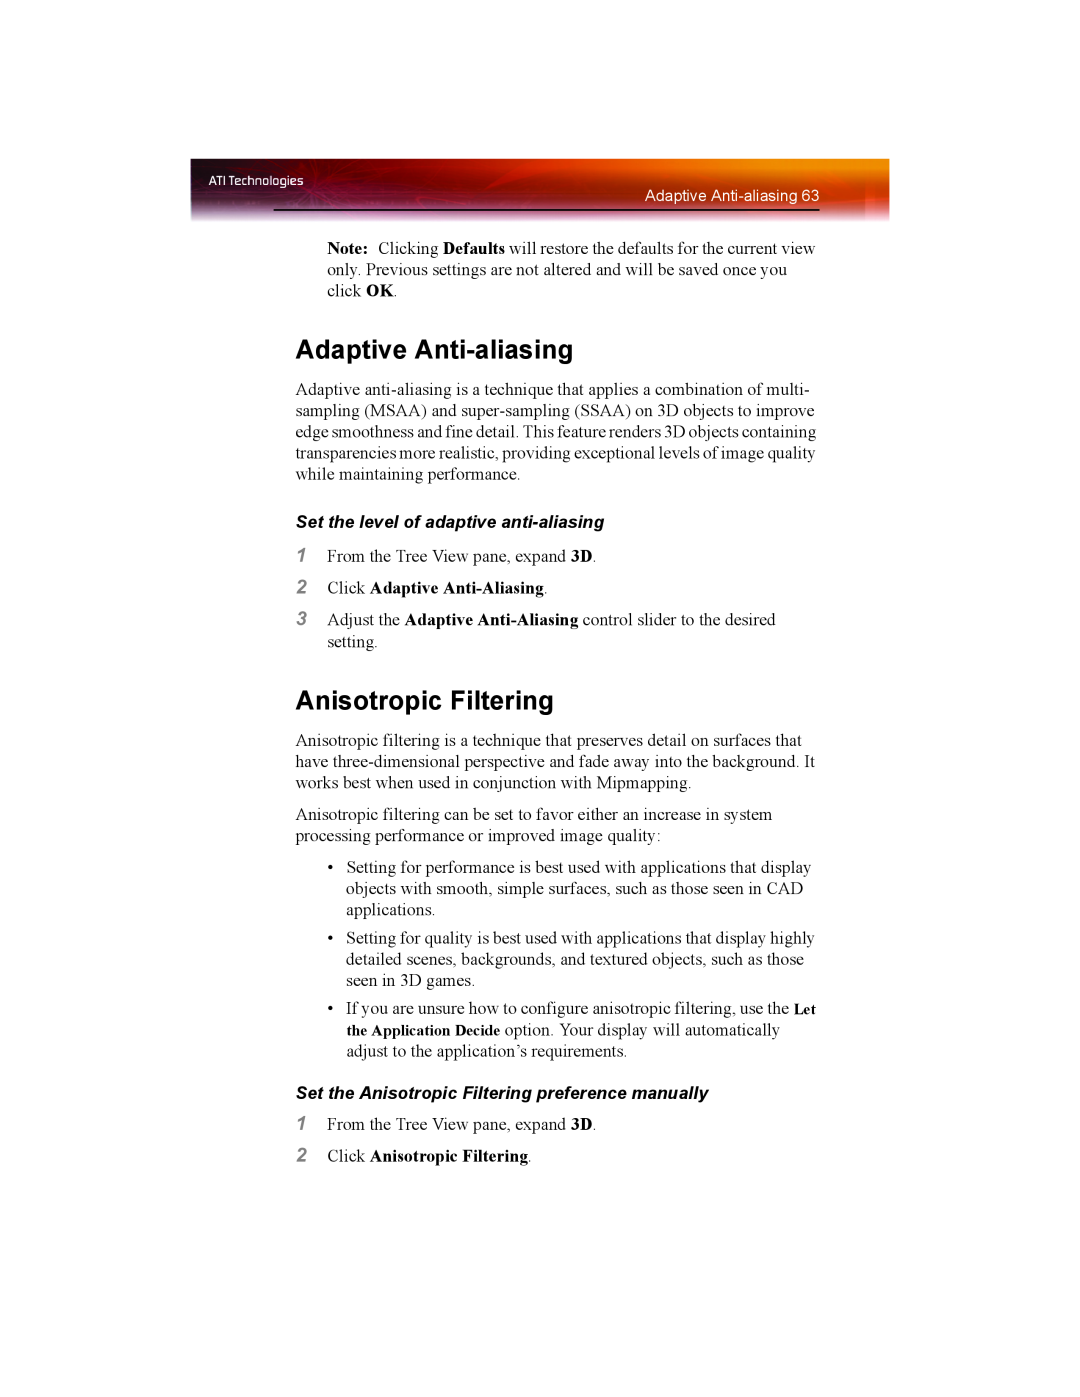 ATI Technologies X1550 SERIES manual Adaptive Anti-aliasing, Anisotropic Filtering, Set the level of adaptive anti-aliasing 